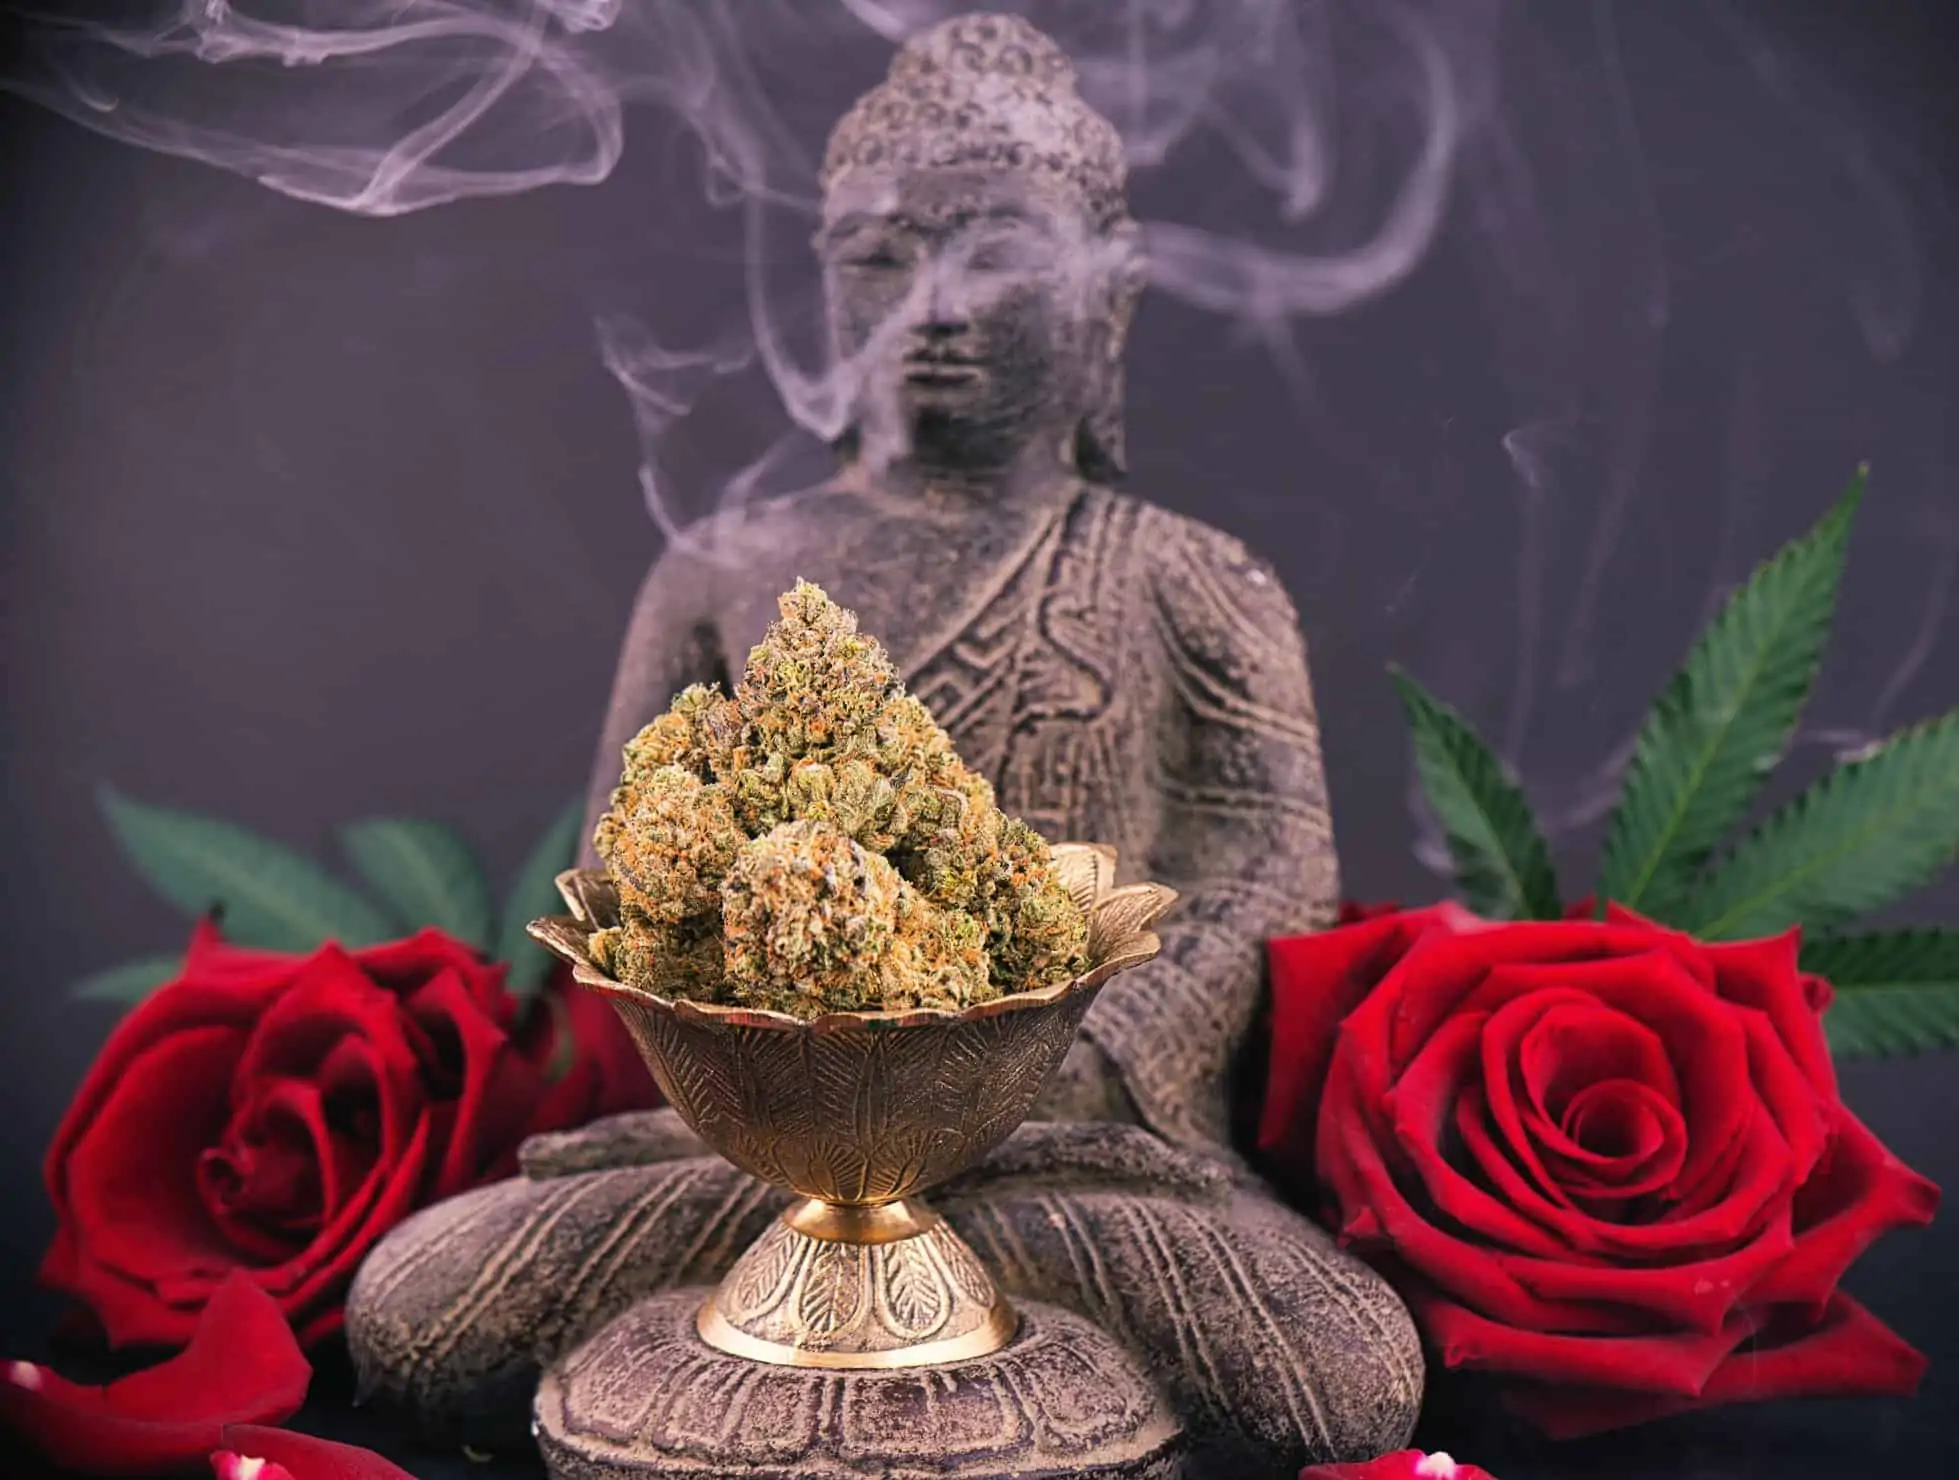 Benefits of Consuming Cannabis While Meditating. Buddha with marijuana and roses.